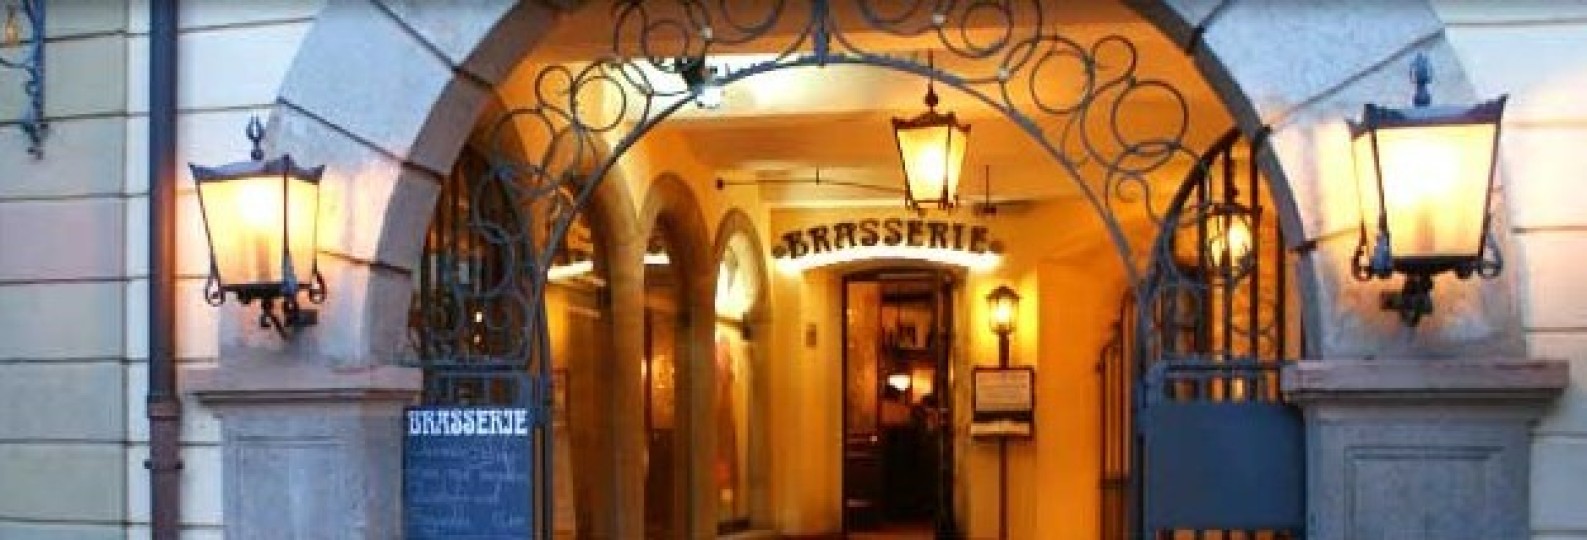 Brasserie